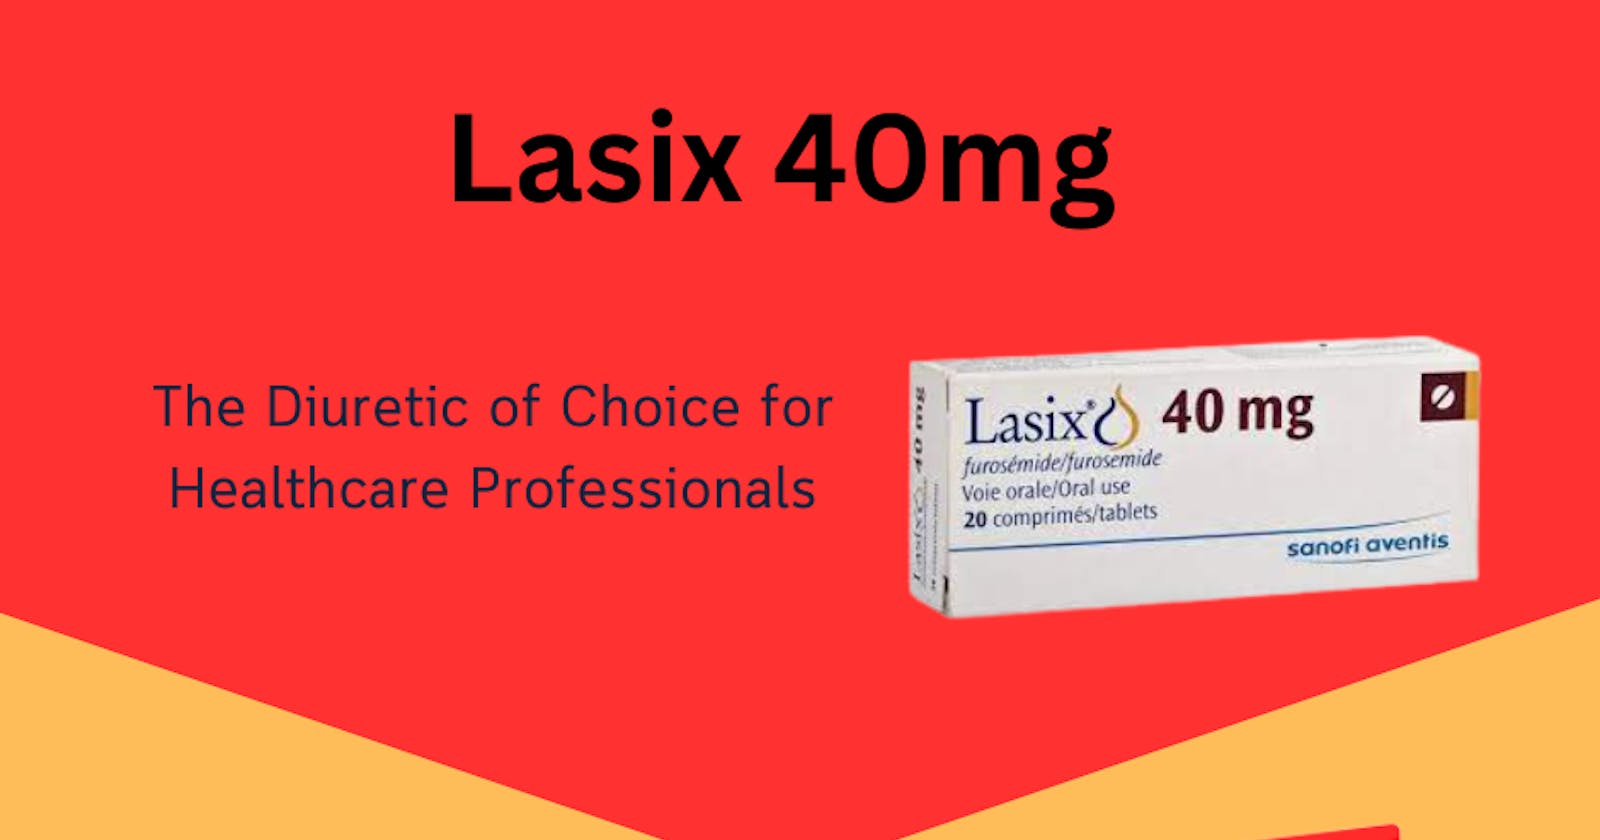 Lasix 40mg - Using Diuretics to Treat Congestive Heart Failure